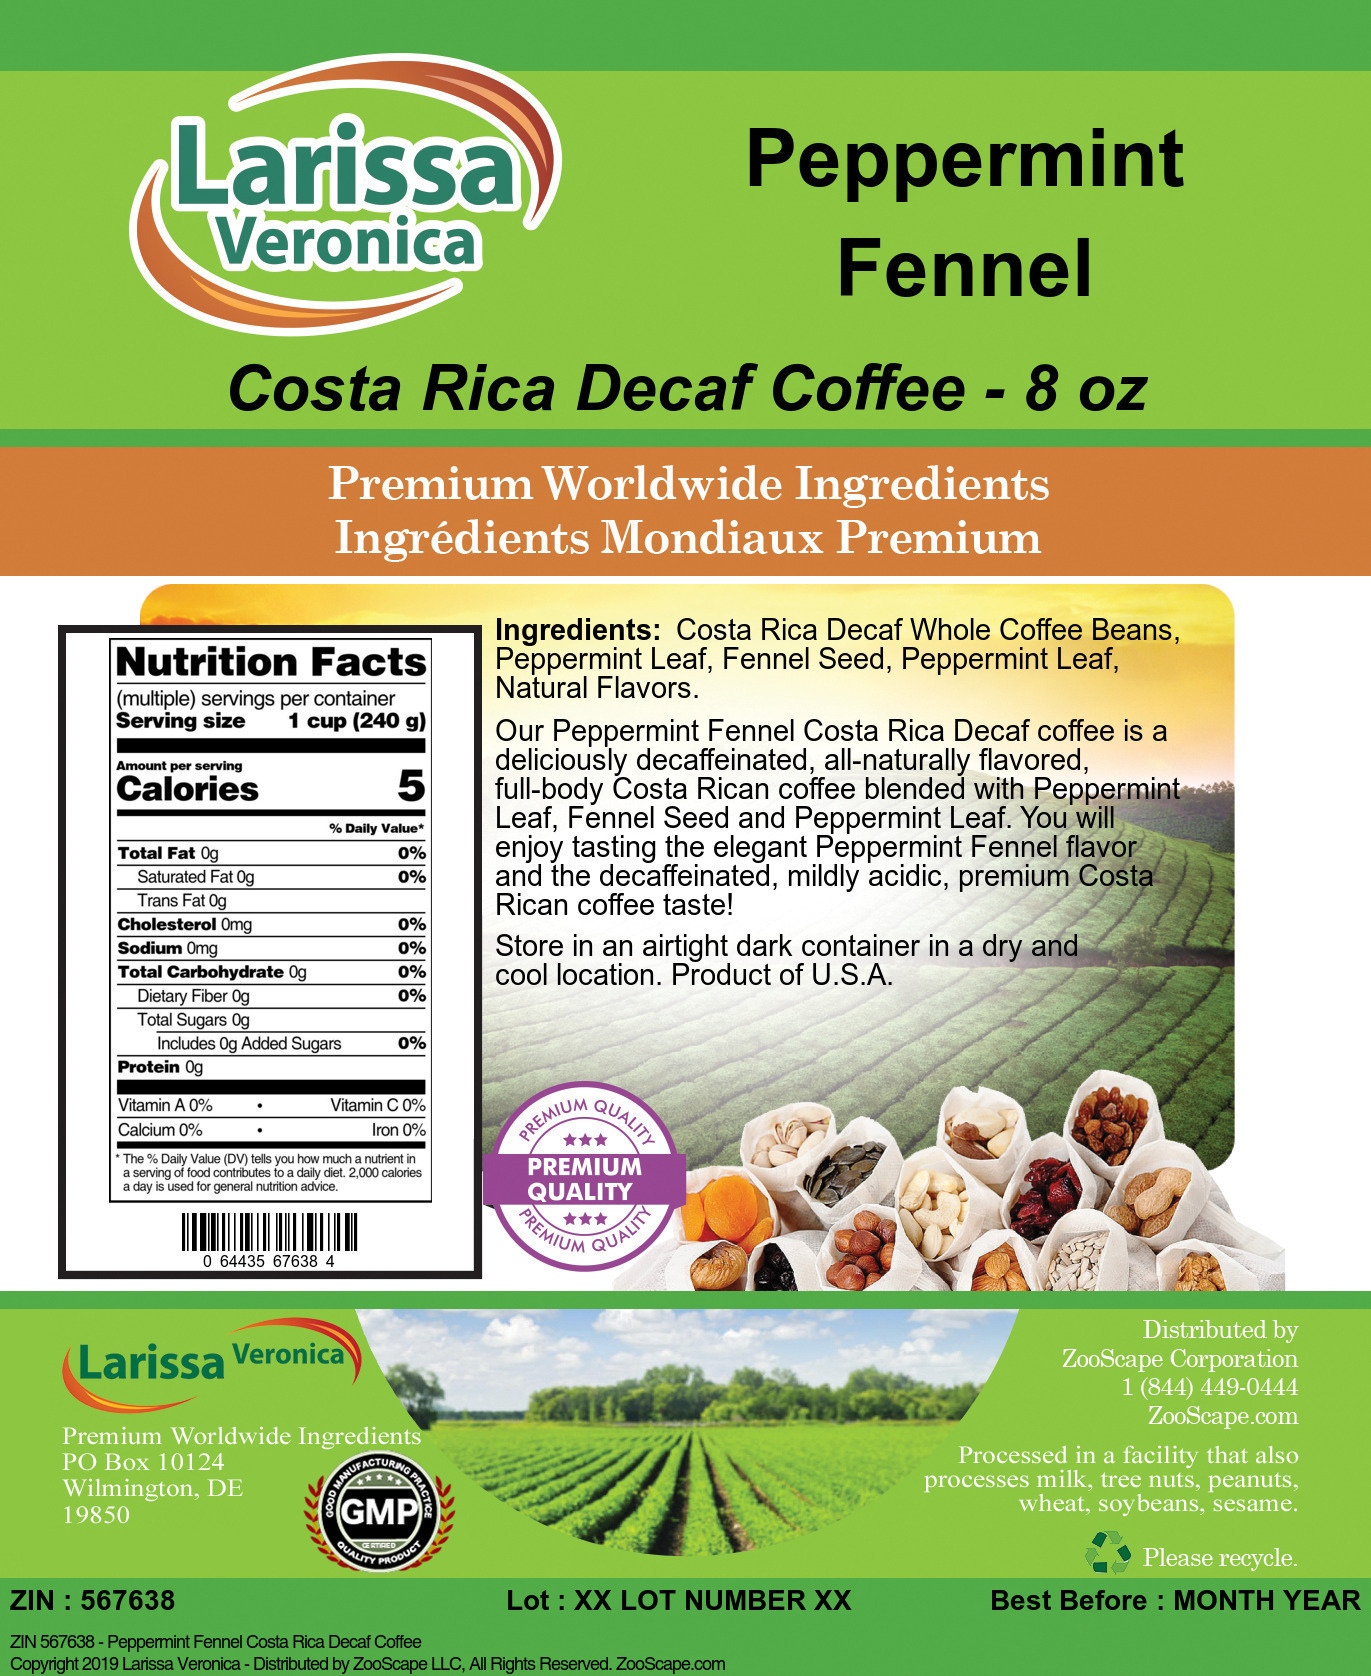 Peppermint Fennel Costa Rica Decaf Coffee - Label